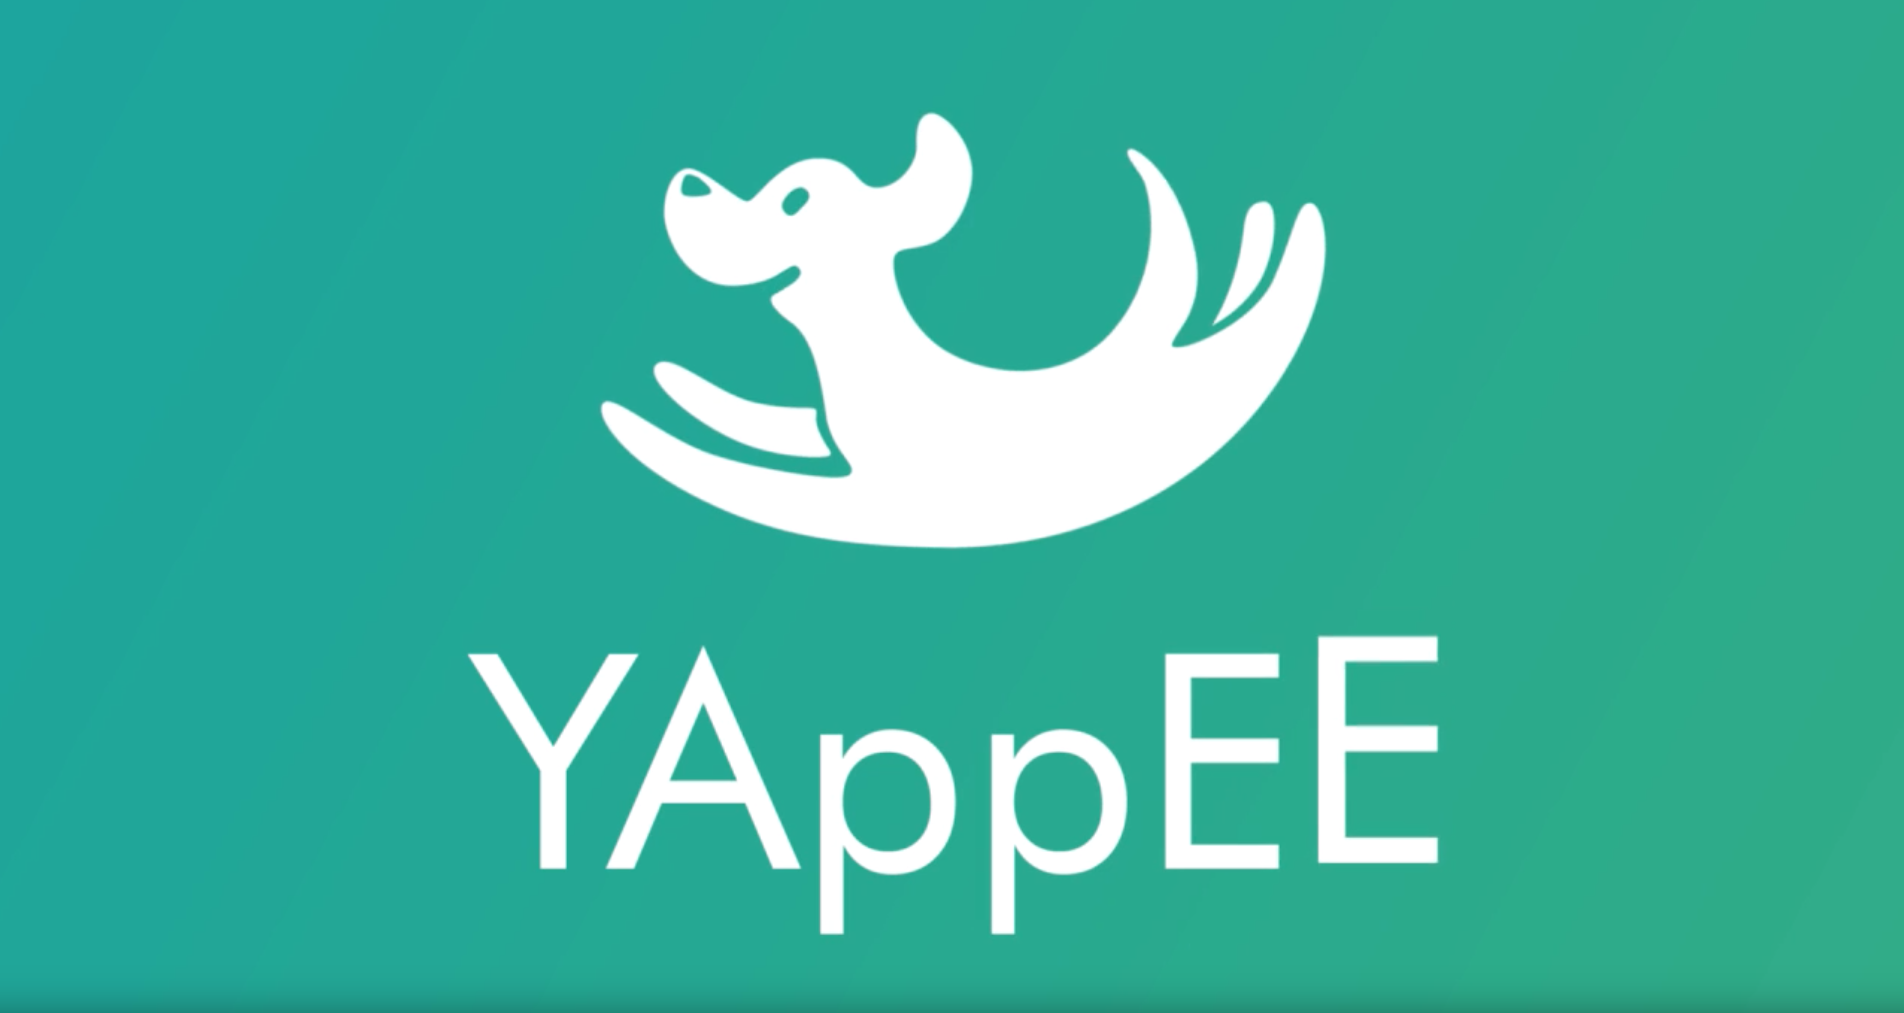 YAppEE App